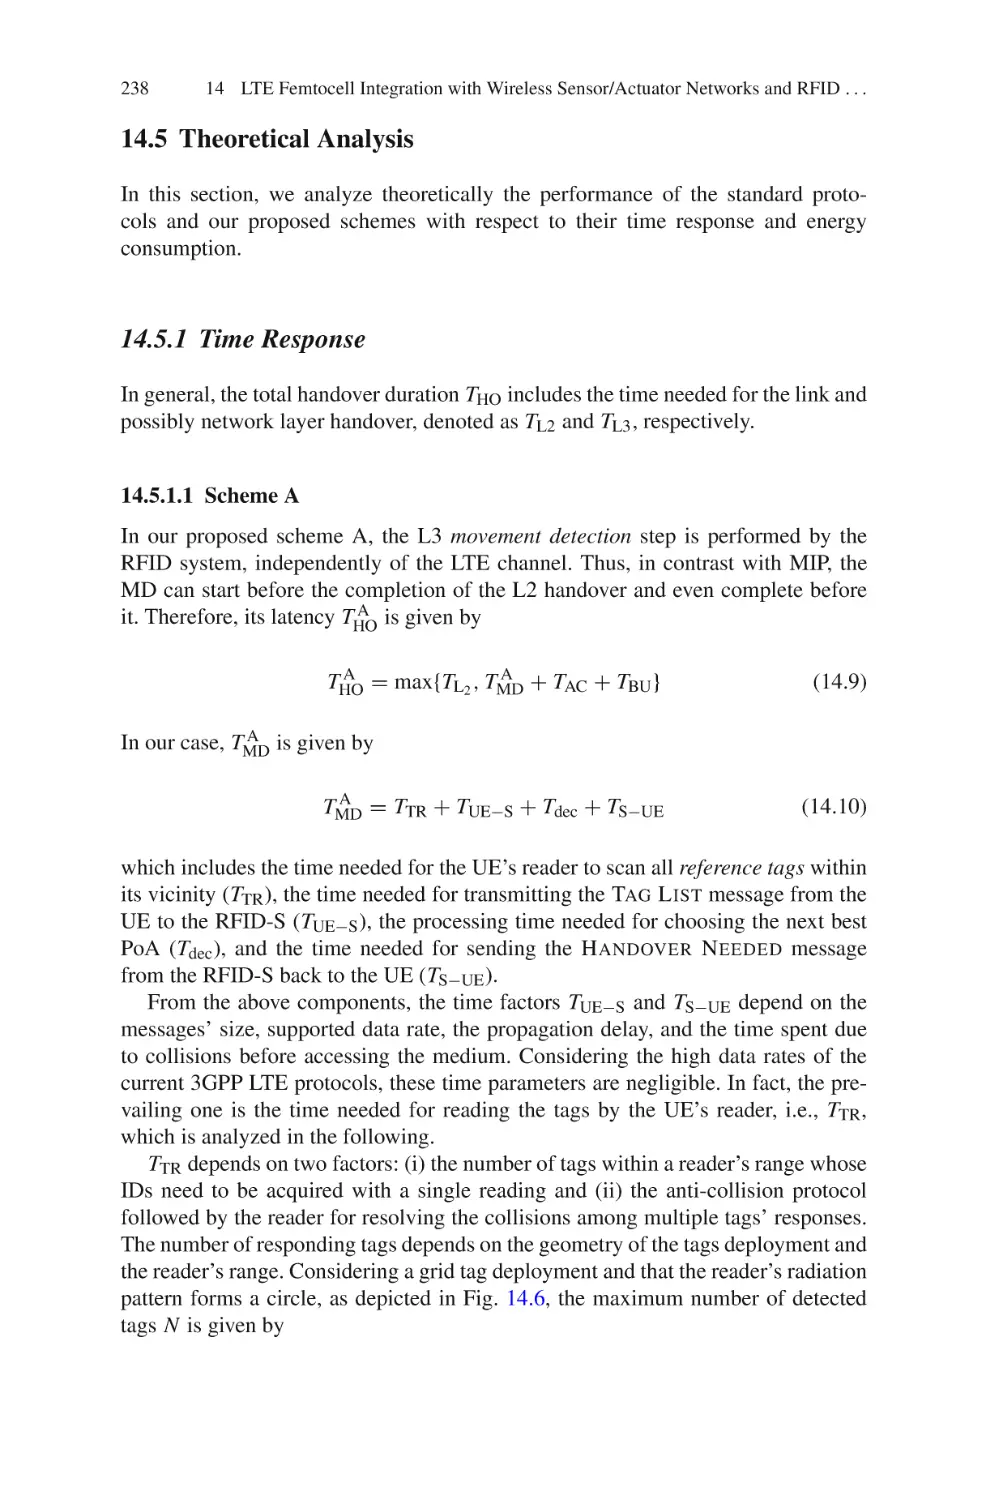 14.5  Theoretical Analysis
14.5.1  Time Response